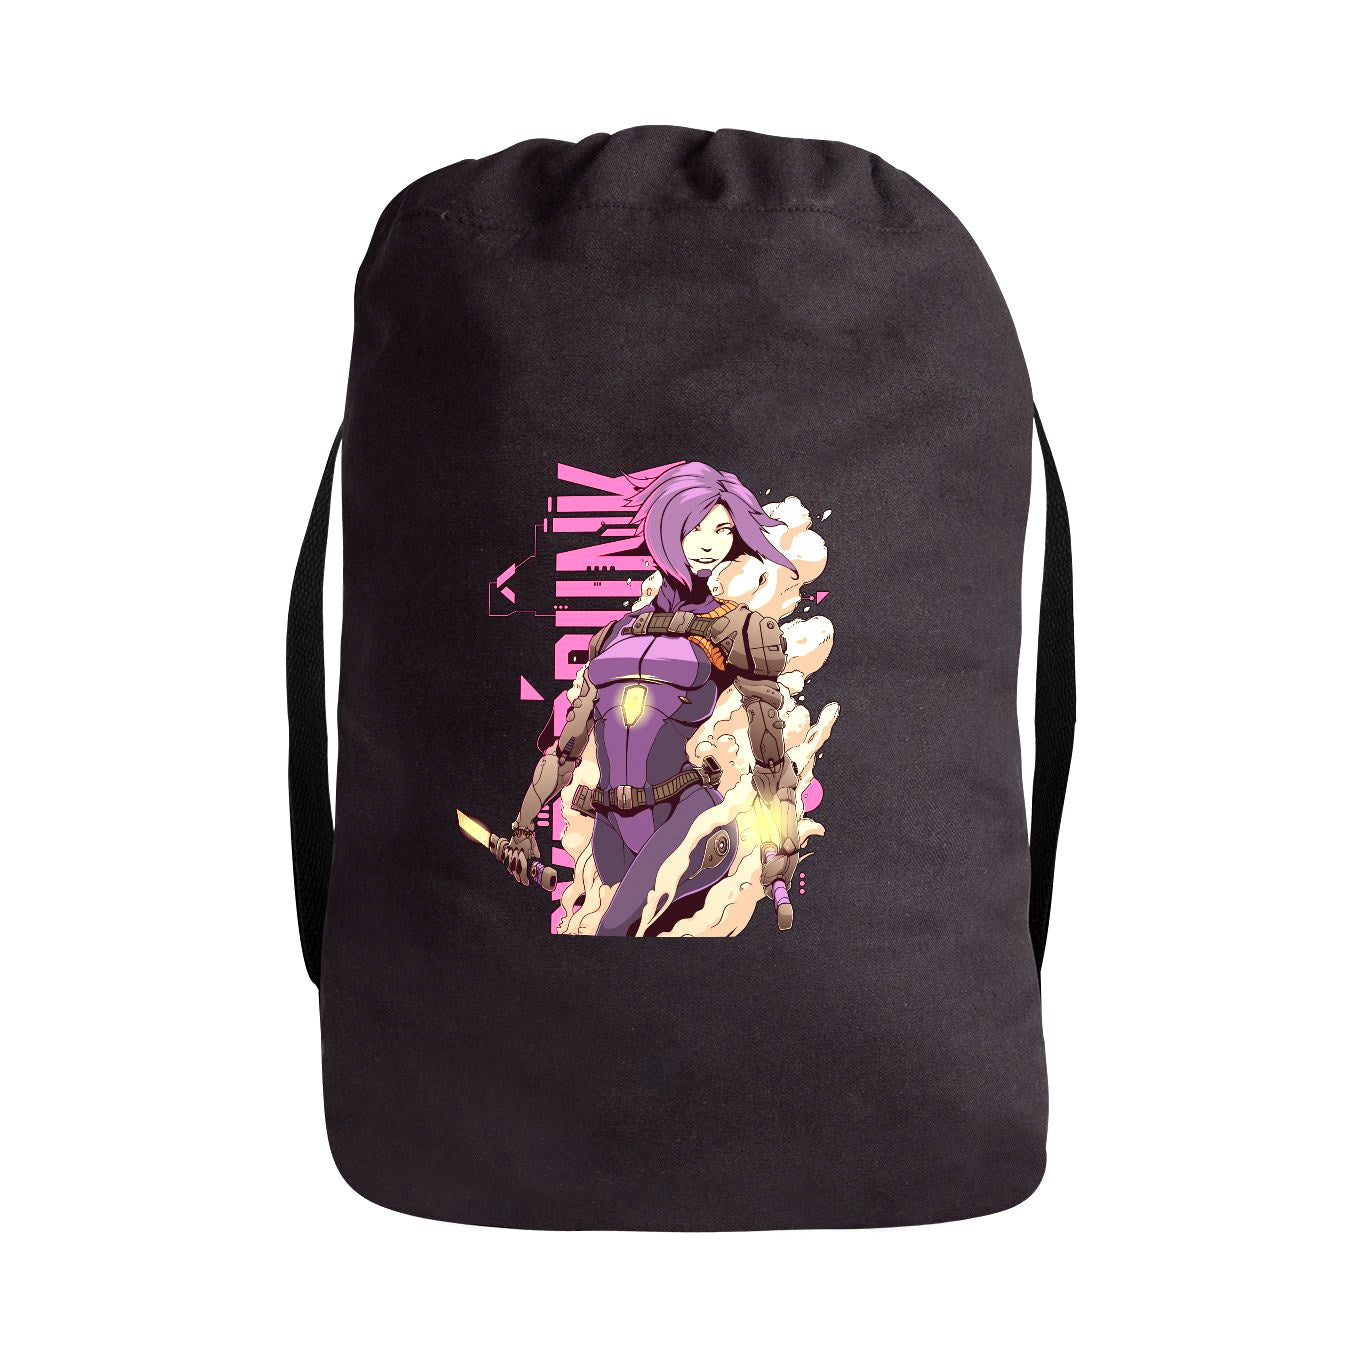 Cyberpunk Warrior Queen Backpack - Hypno Monkey